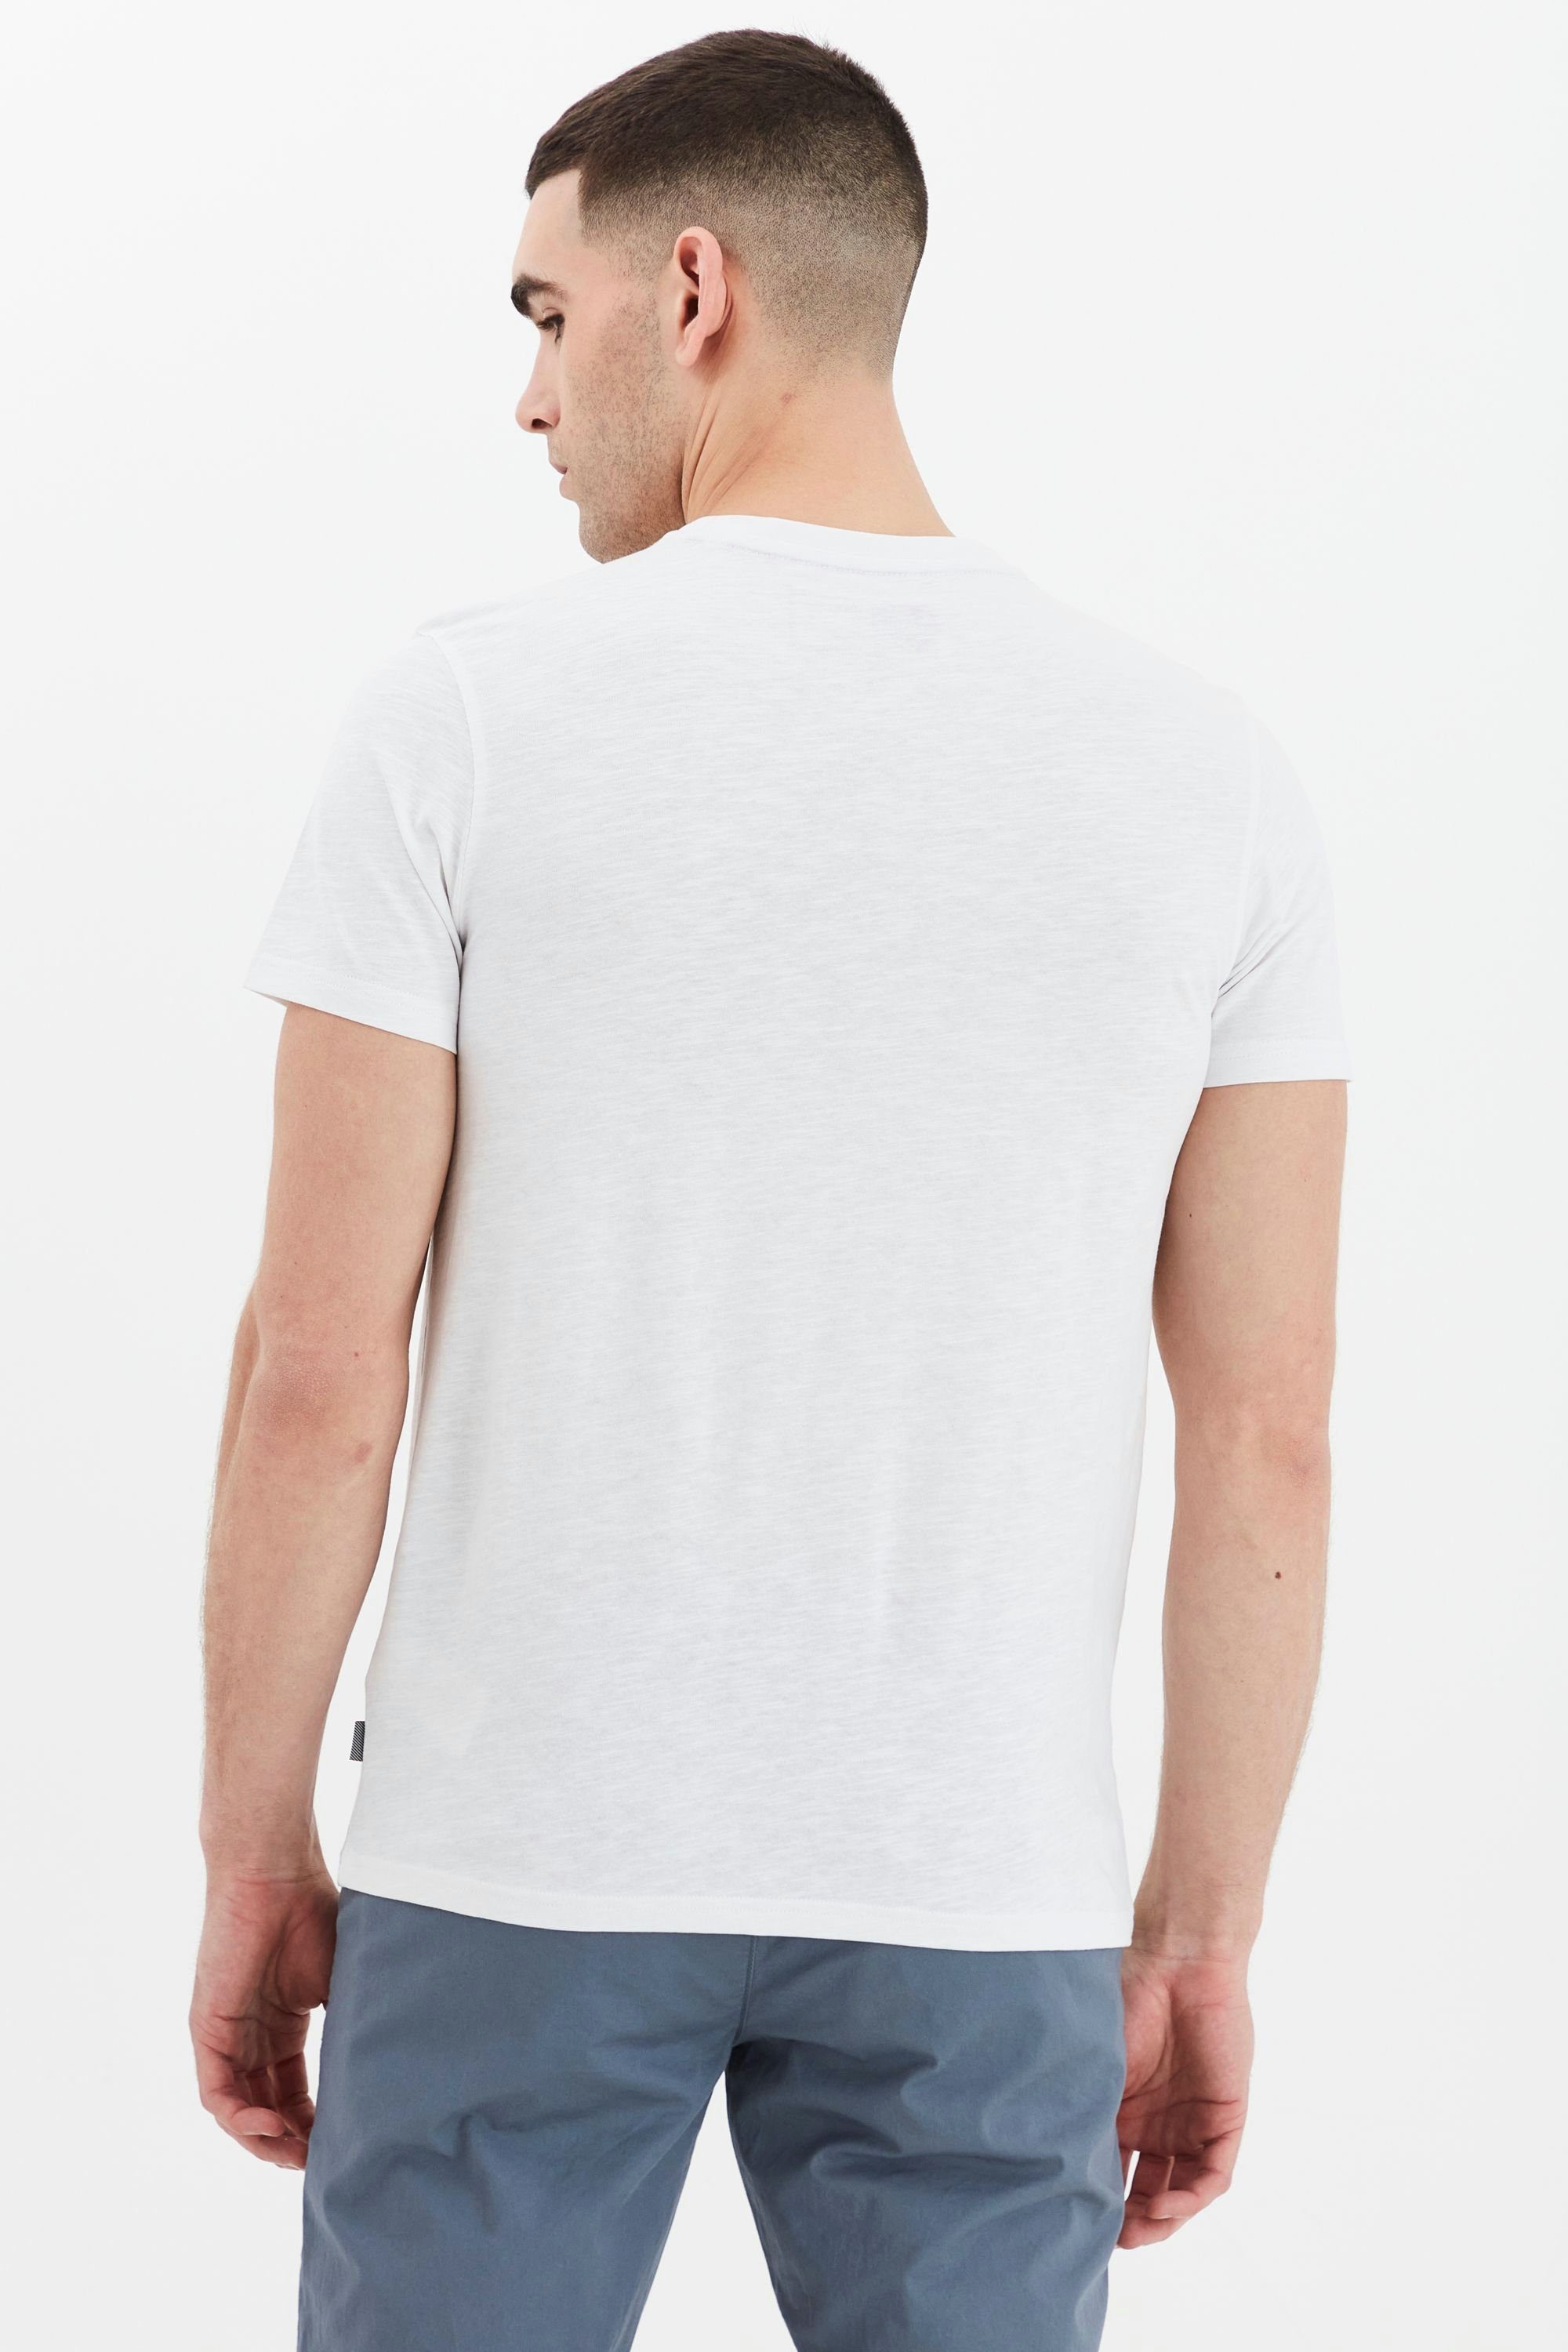 (110601) mit !Solid Print-Shirt White SDEmmo Print T-Shirt